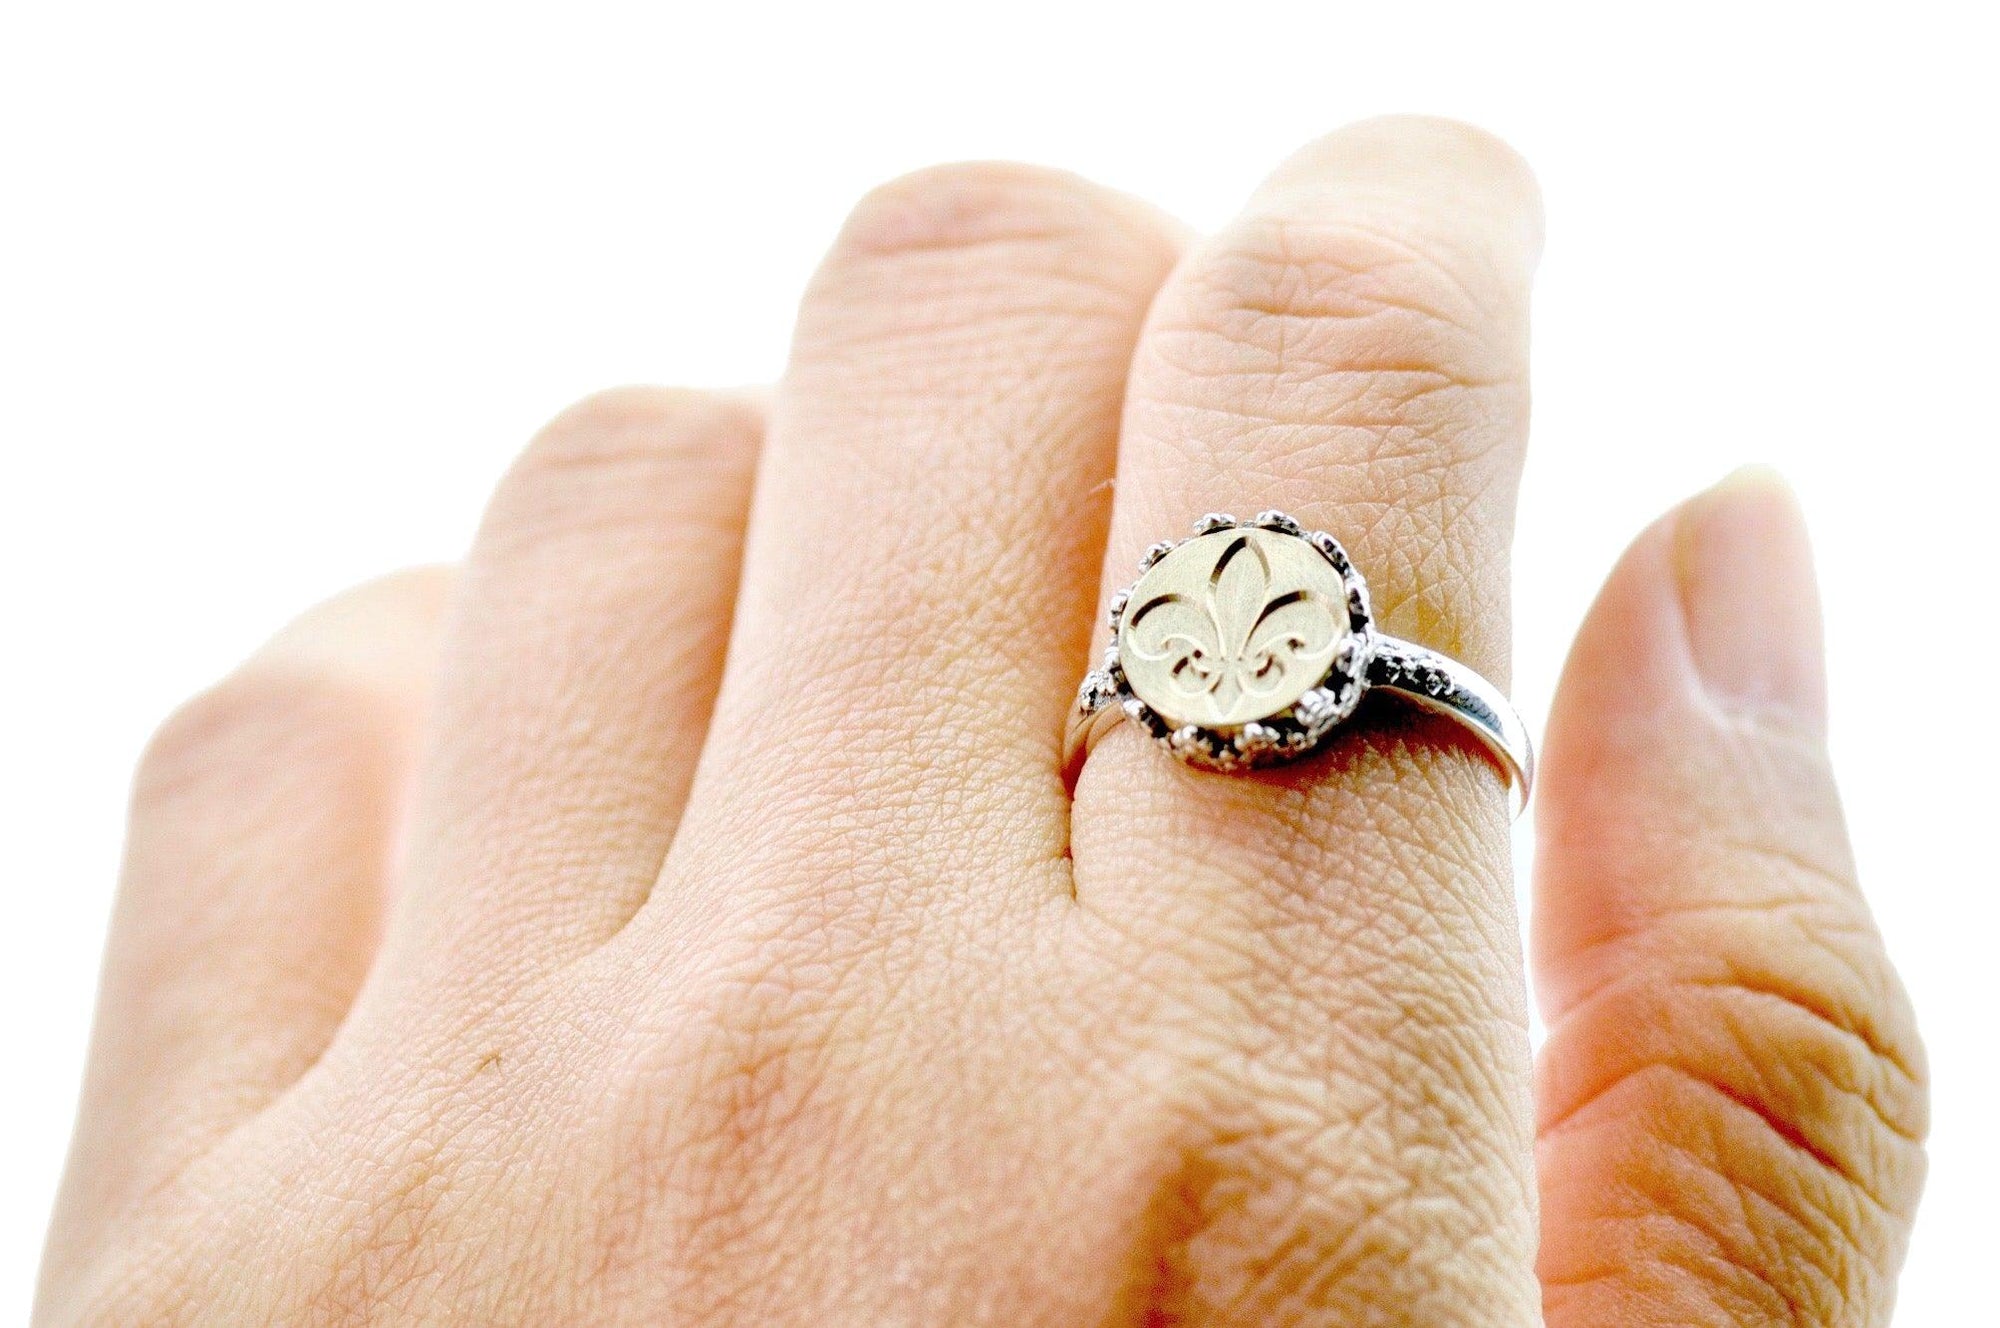 Fleur de Lis Signet Ring - Backtozero B20 - 10fc, 10mm, 10mm ring, accessory, Copper Gold, fleur, Fleur de Lis, floral, Flower, her, jewelry, ring, seal, seal ring, signet ring, size 6, size 7, size 8, wax seal, wax seal ring, wax seal stamp, wreath